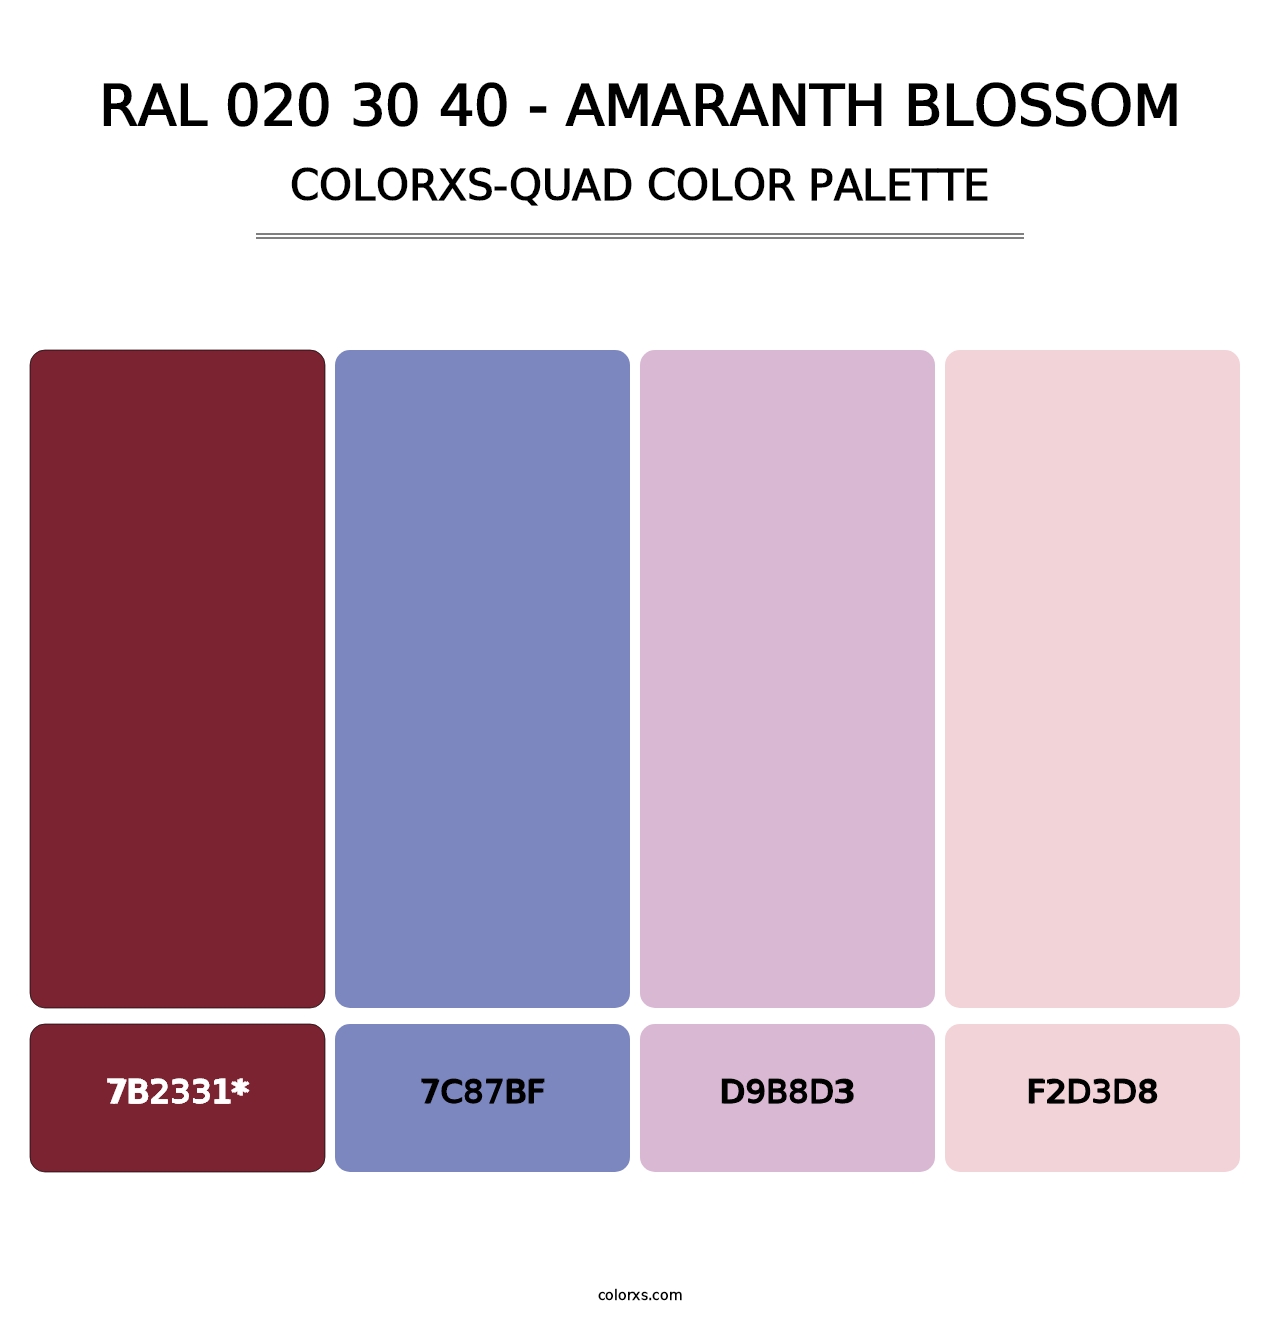 RAL 020 30 40 - Amaranth Blossom - Colorxs Quad Palette